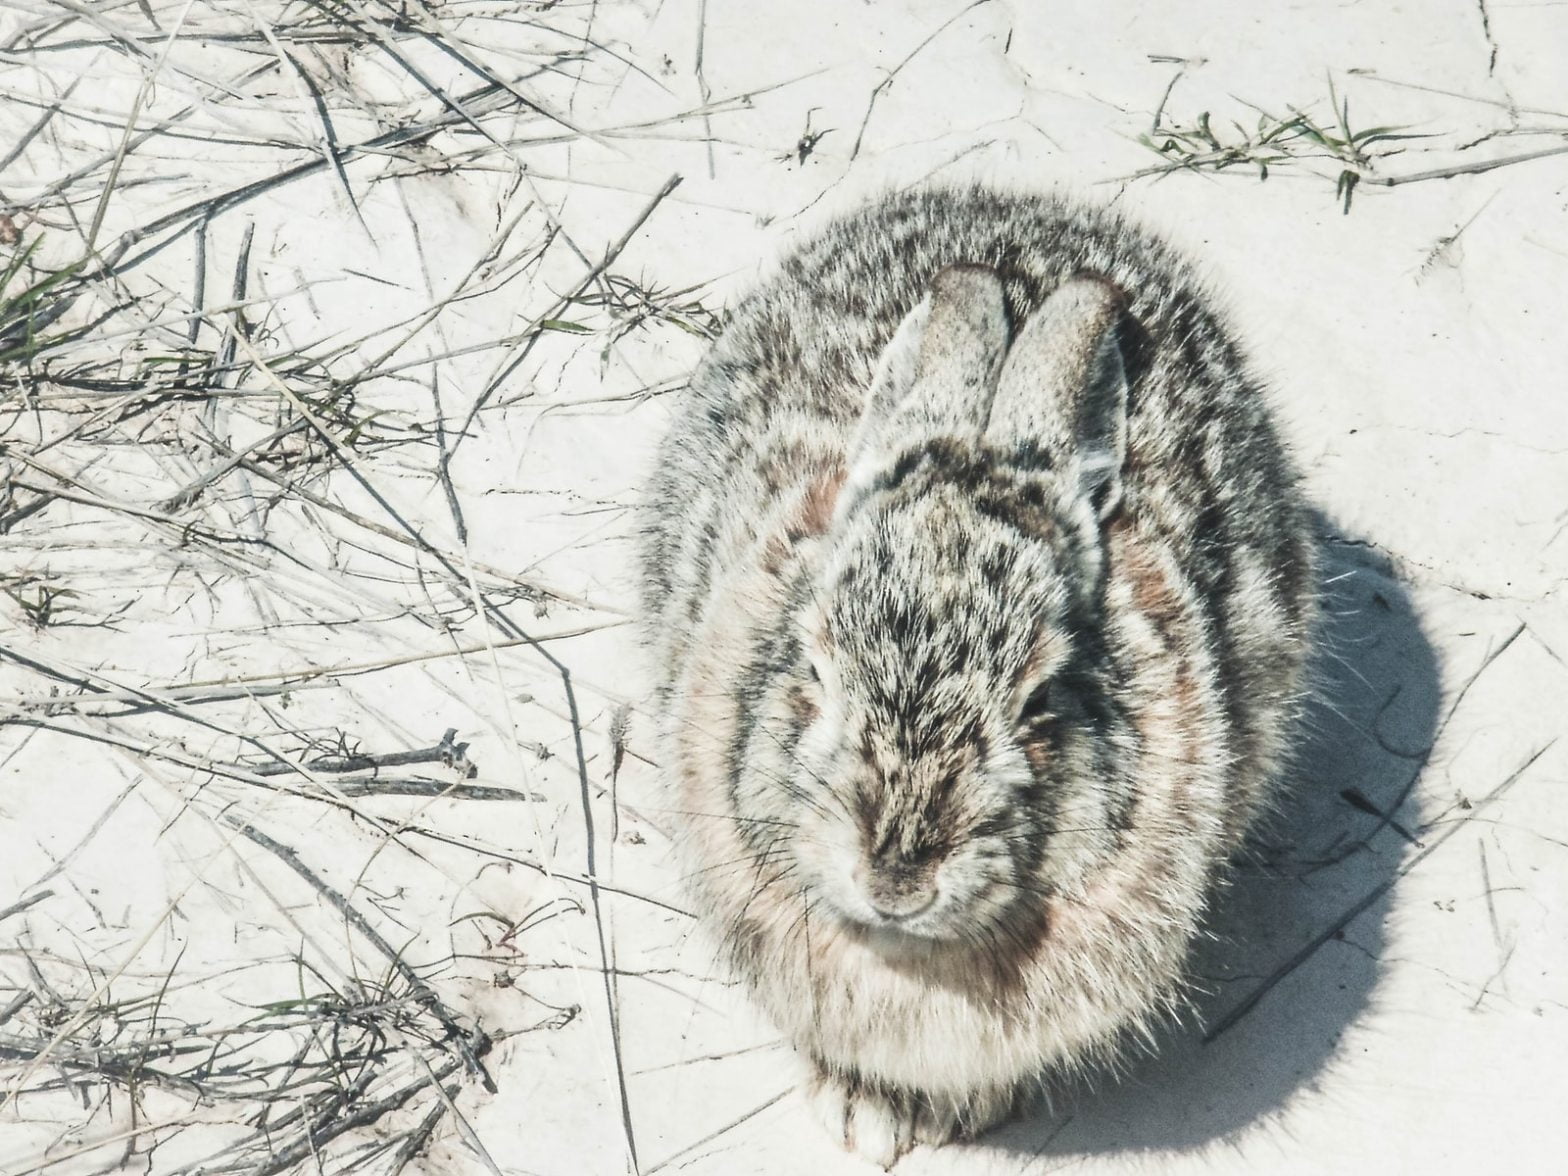 White rabbit sleeping in snow. Do rabbits like snow